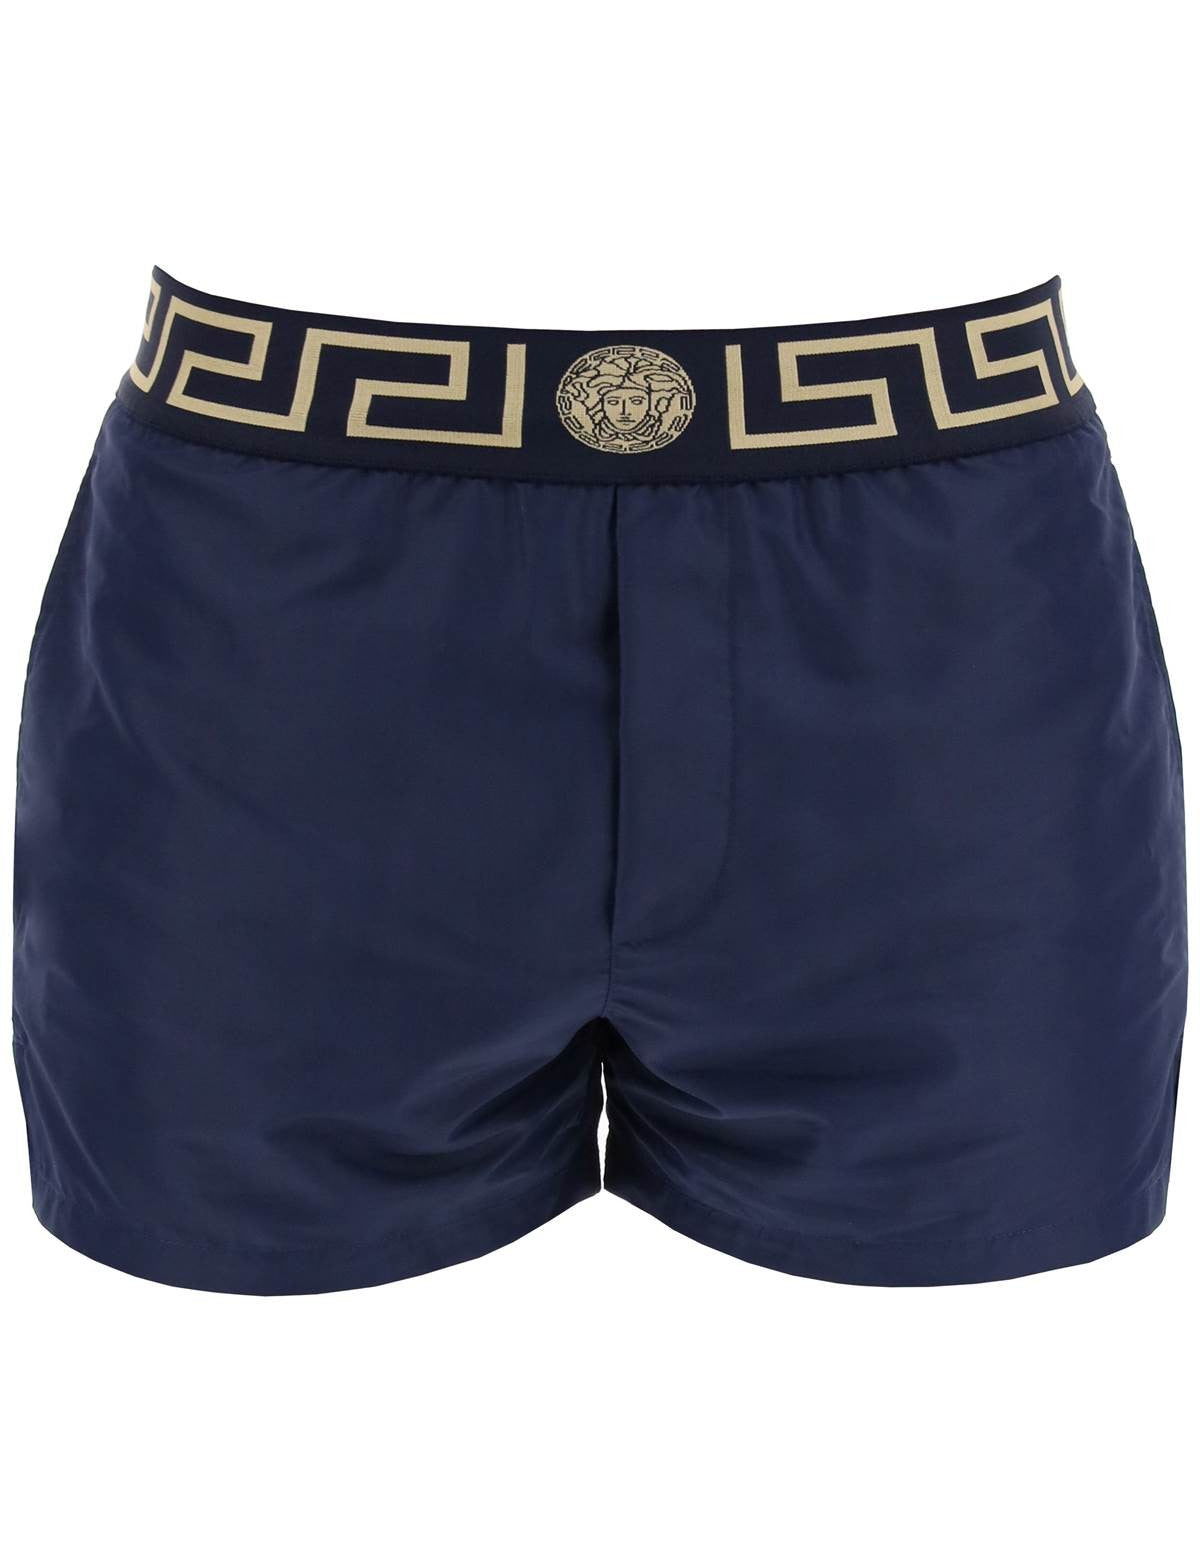 versace-greek-sea-bermuda-shorts-for_1780e450-3172-494f-acb1-791a25c492da.jpg